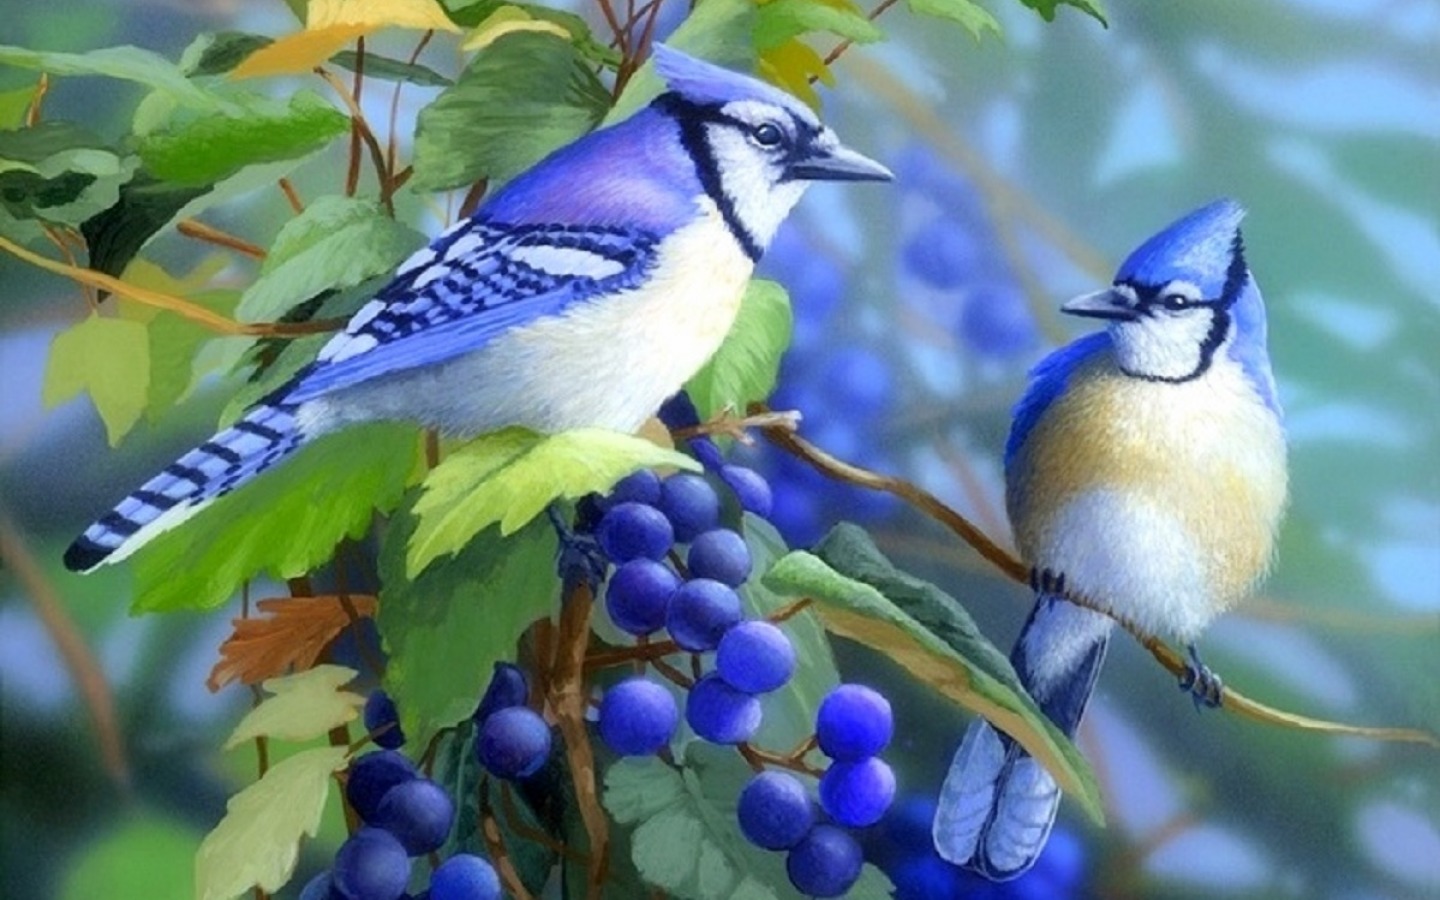 Windows Backgrounds animal, blue jay, bird, branch, grapes, painting, vine, birds